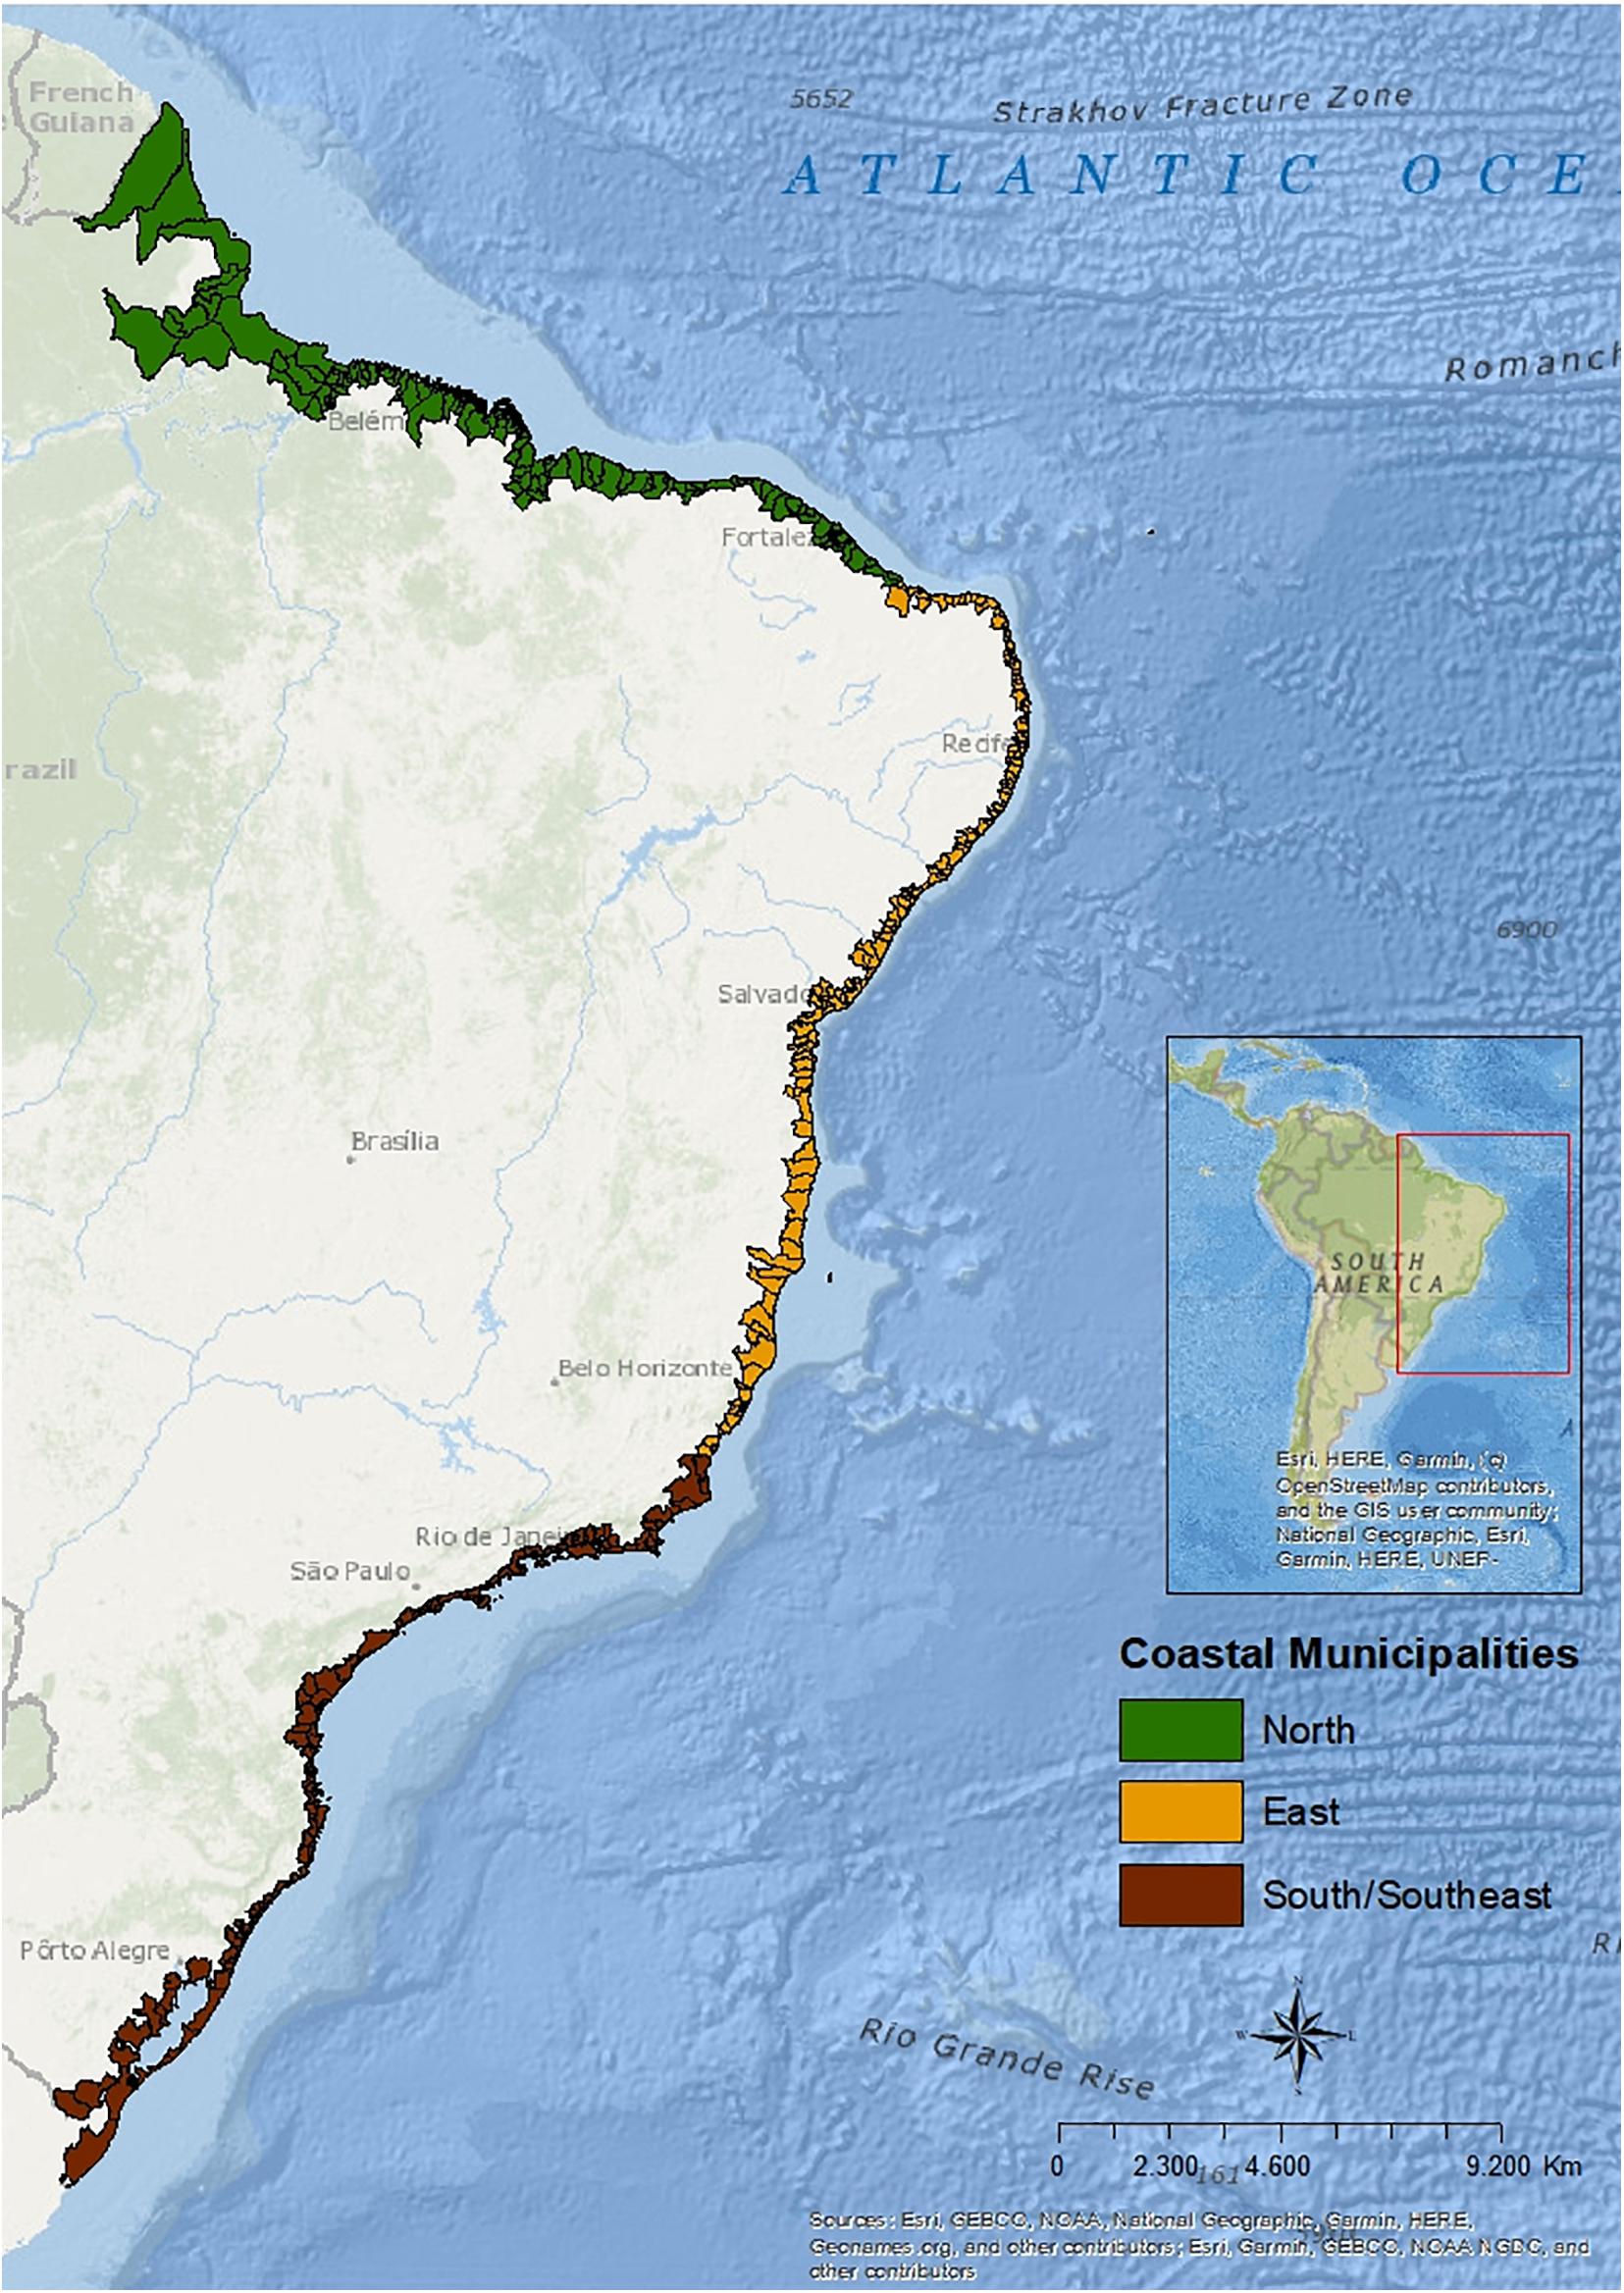 Frontiers Social Vulnerability And Human Development Of Brazilian Coastal Populations 0183